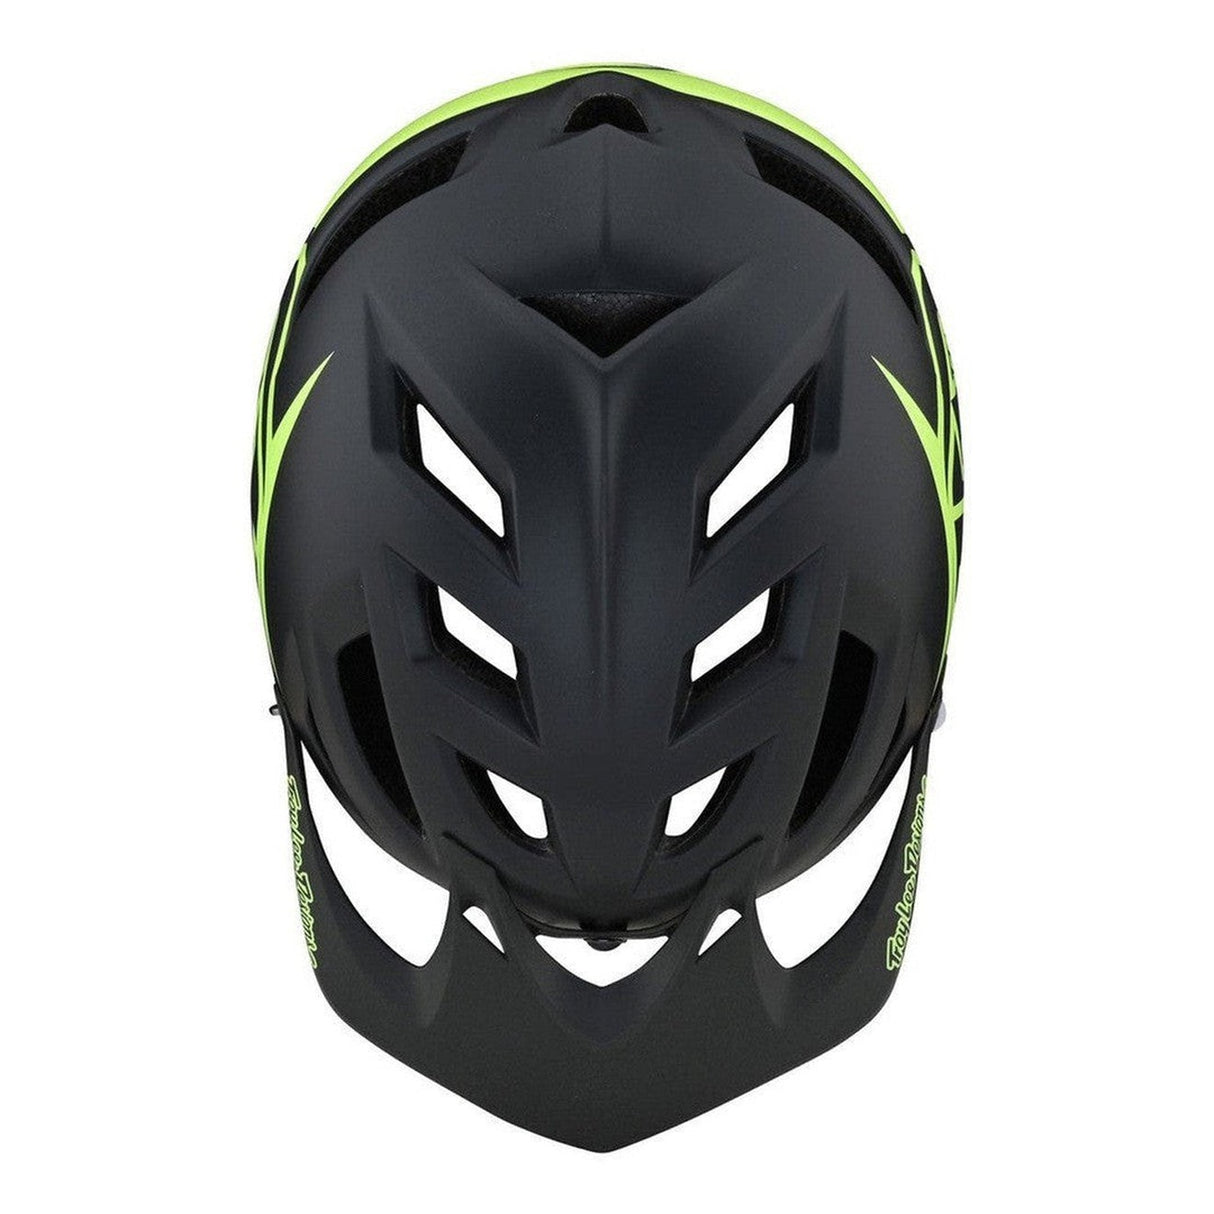 Troy Lee Designs A1 AS MIPS Helmet - Classic Grey/Green Top